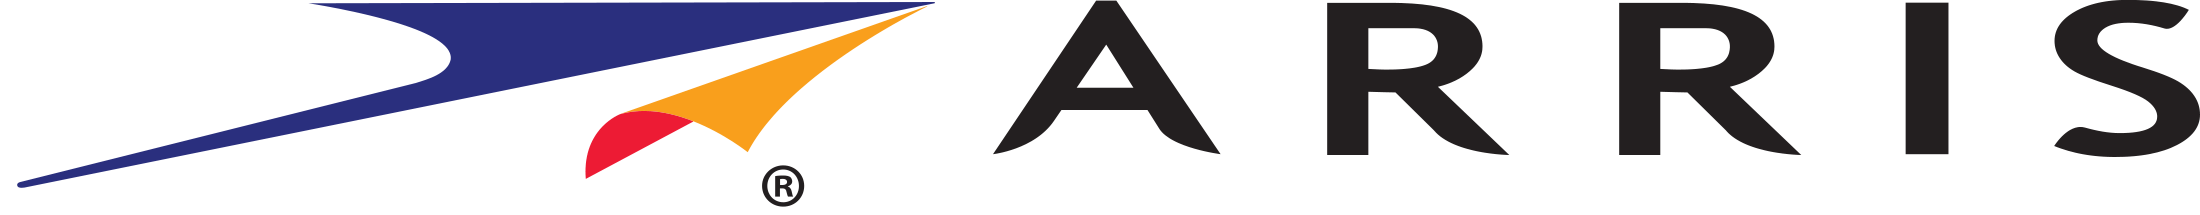 Arris Logo - Pace Media Kit | ARRIS